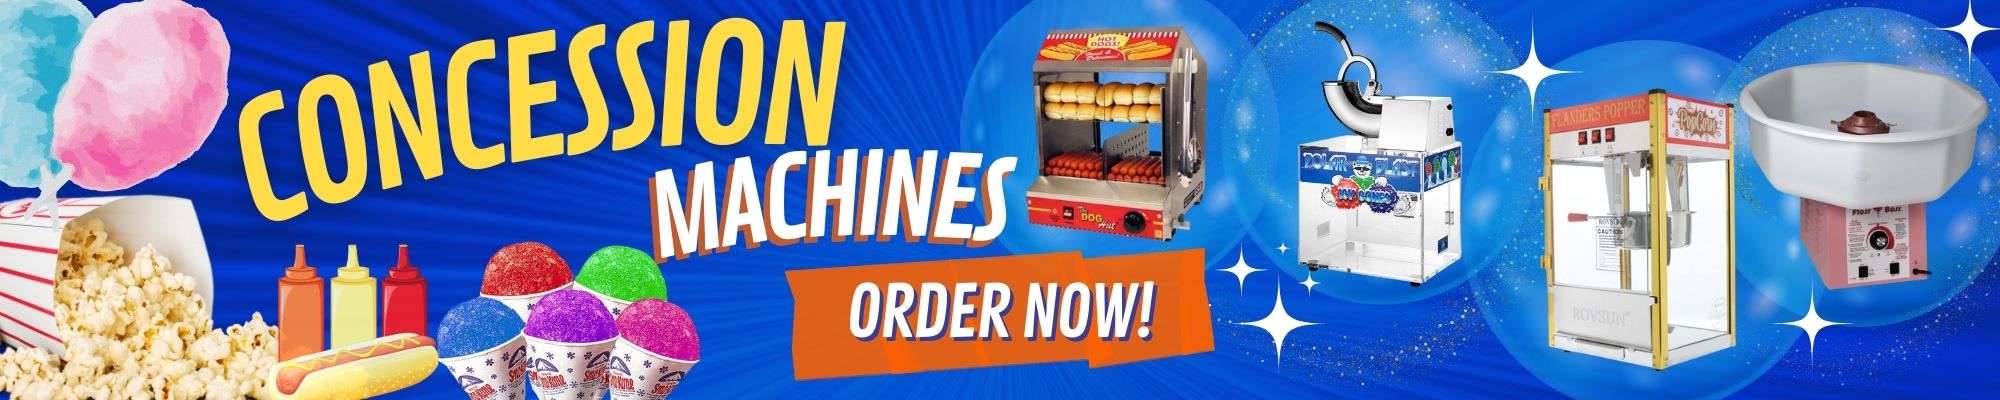 Concession Machines Rental Los Angeles, Popcorn Machine, Cotton Candy Machine, Snow Cone, Hot Dog Machine, Party Fun Food, Event Fun Food